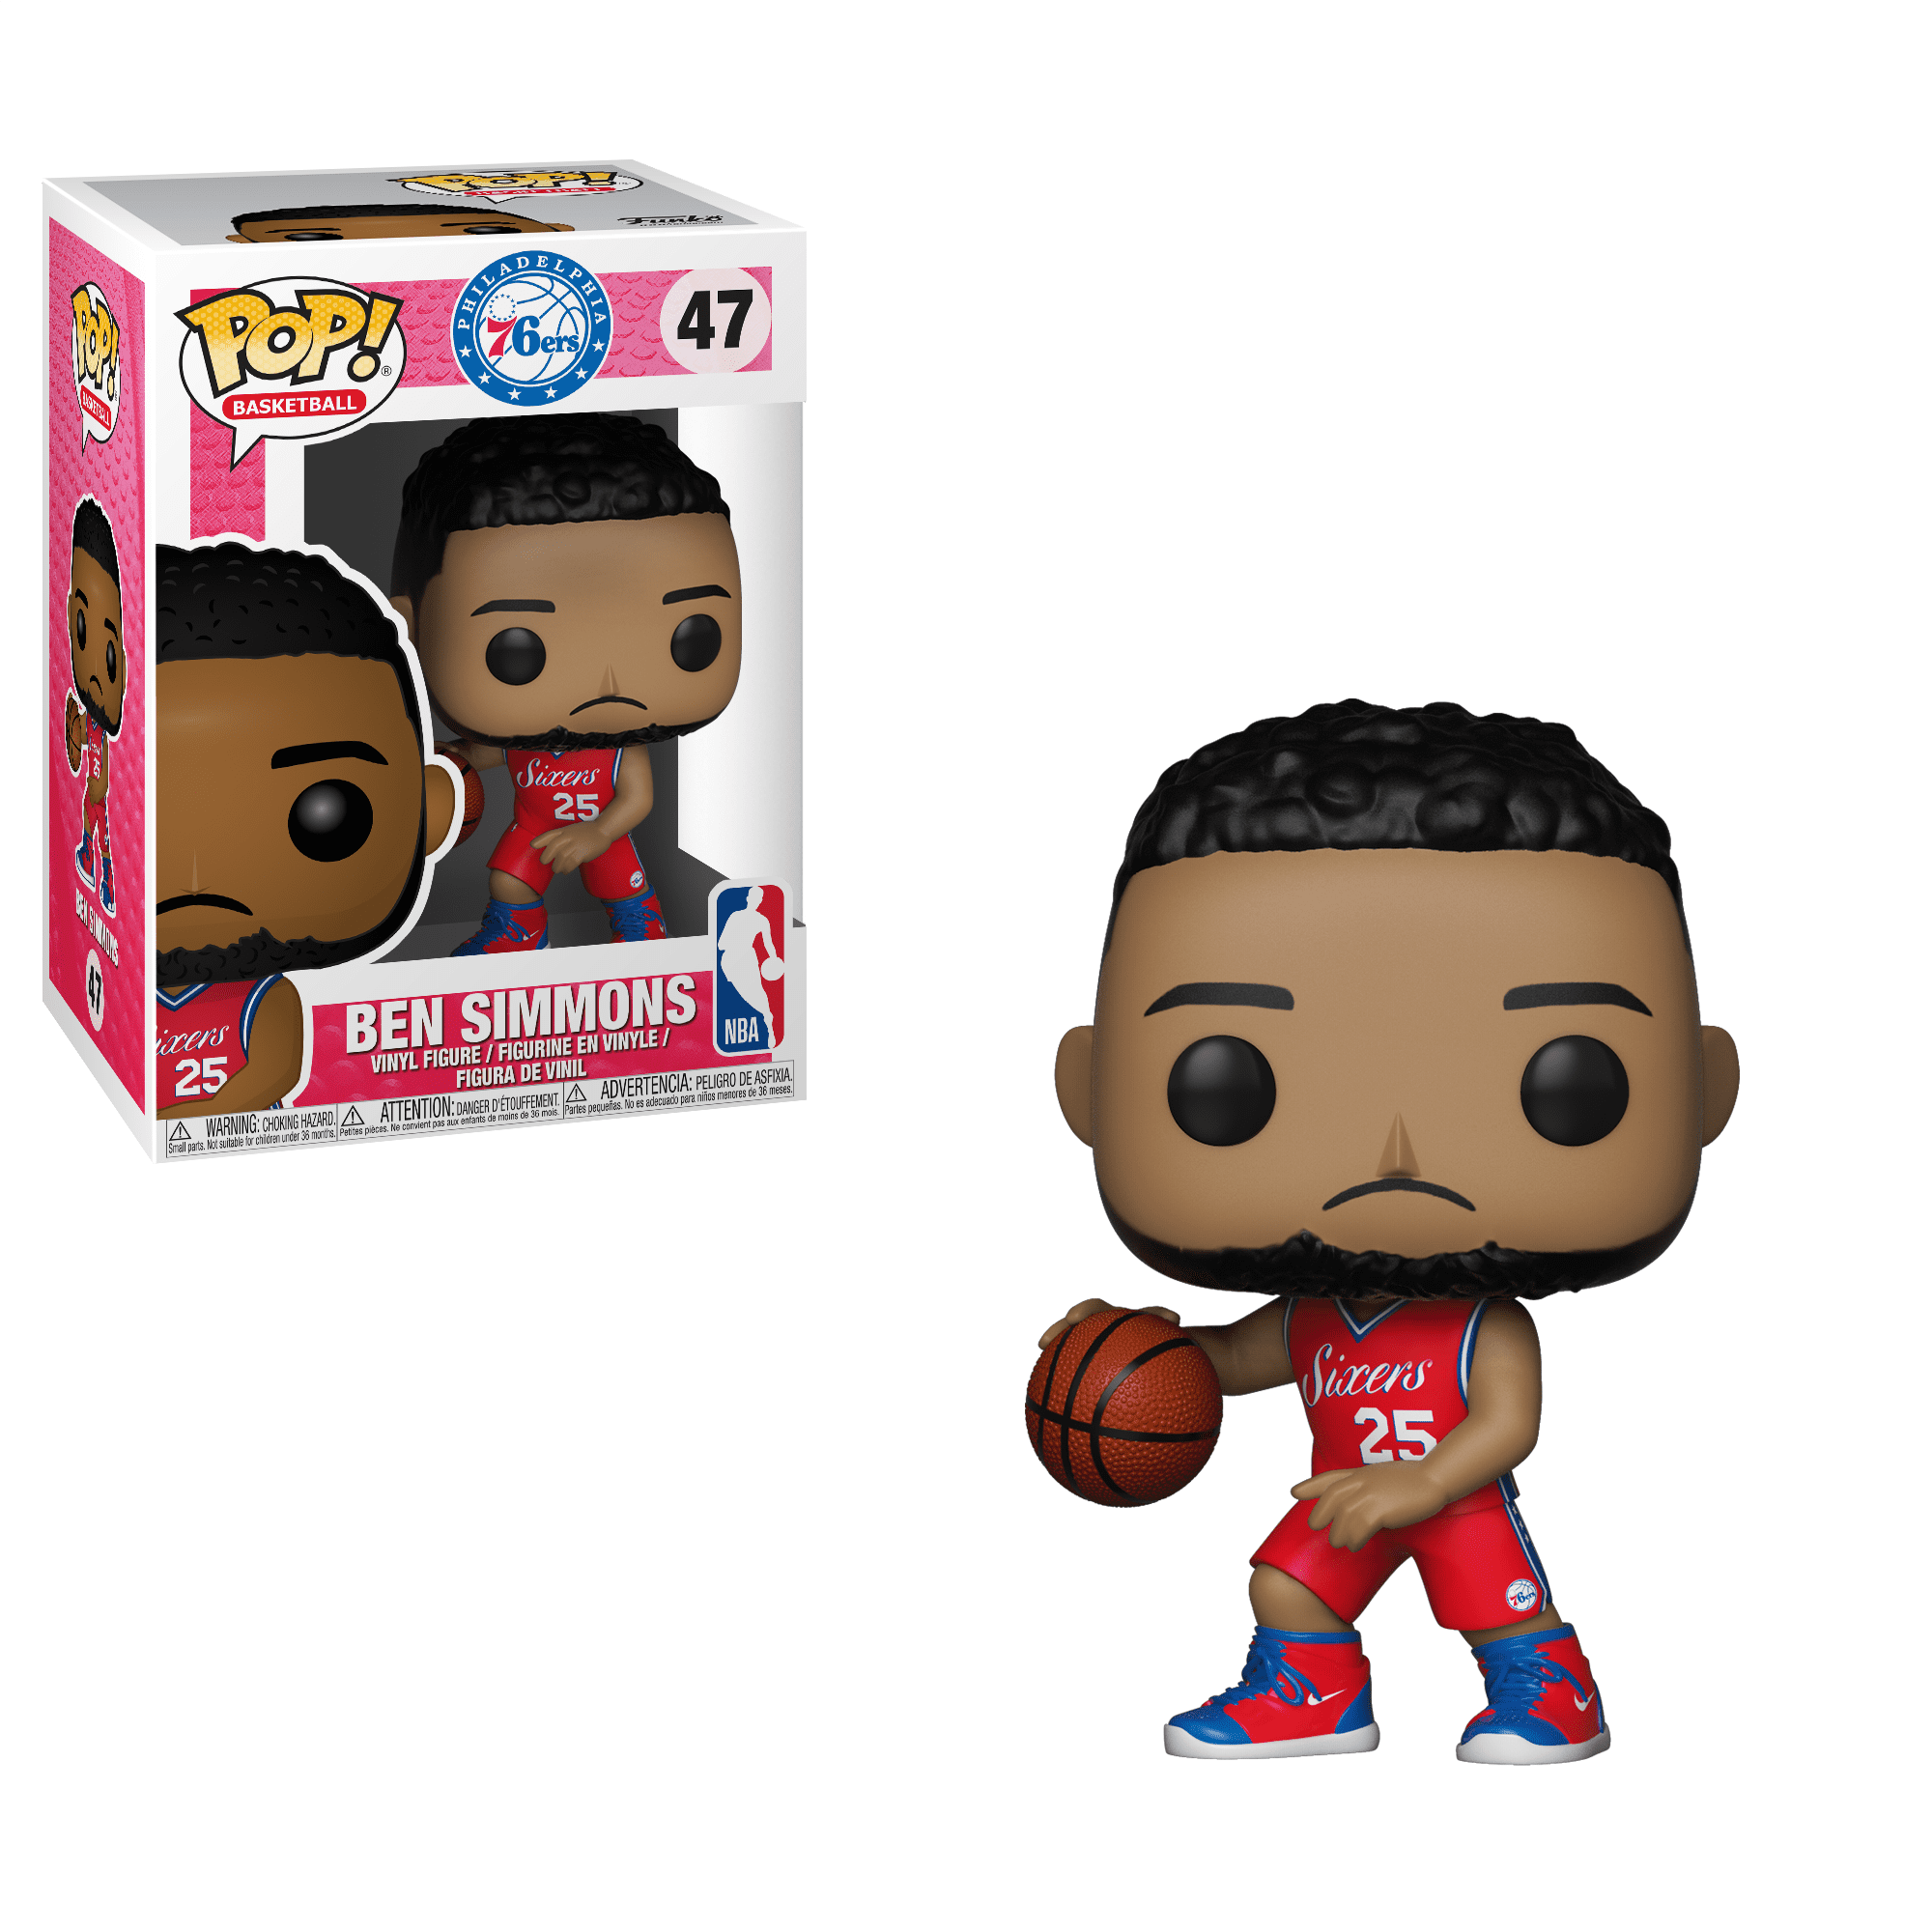 NBA - Michael Jordan - POP! Sports/Basketball action figure 76